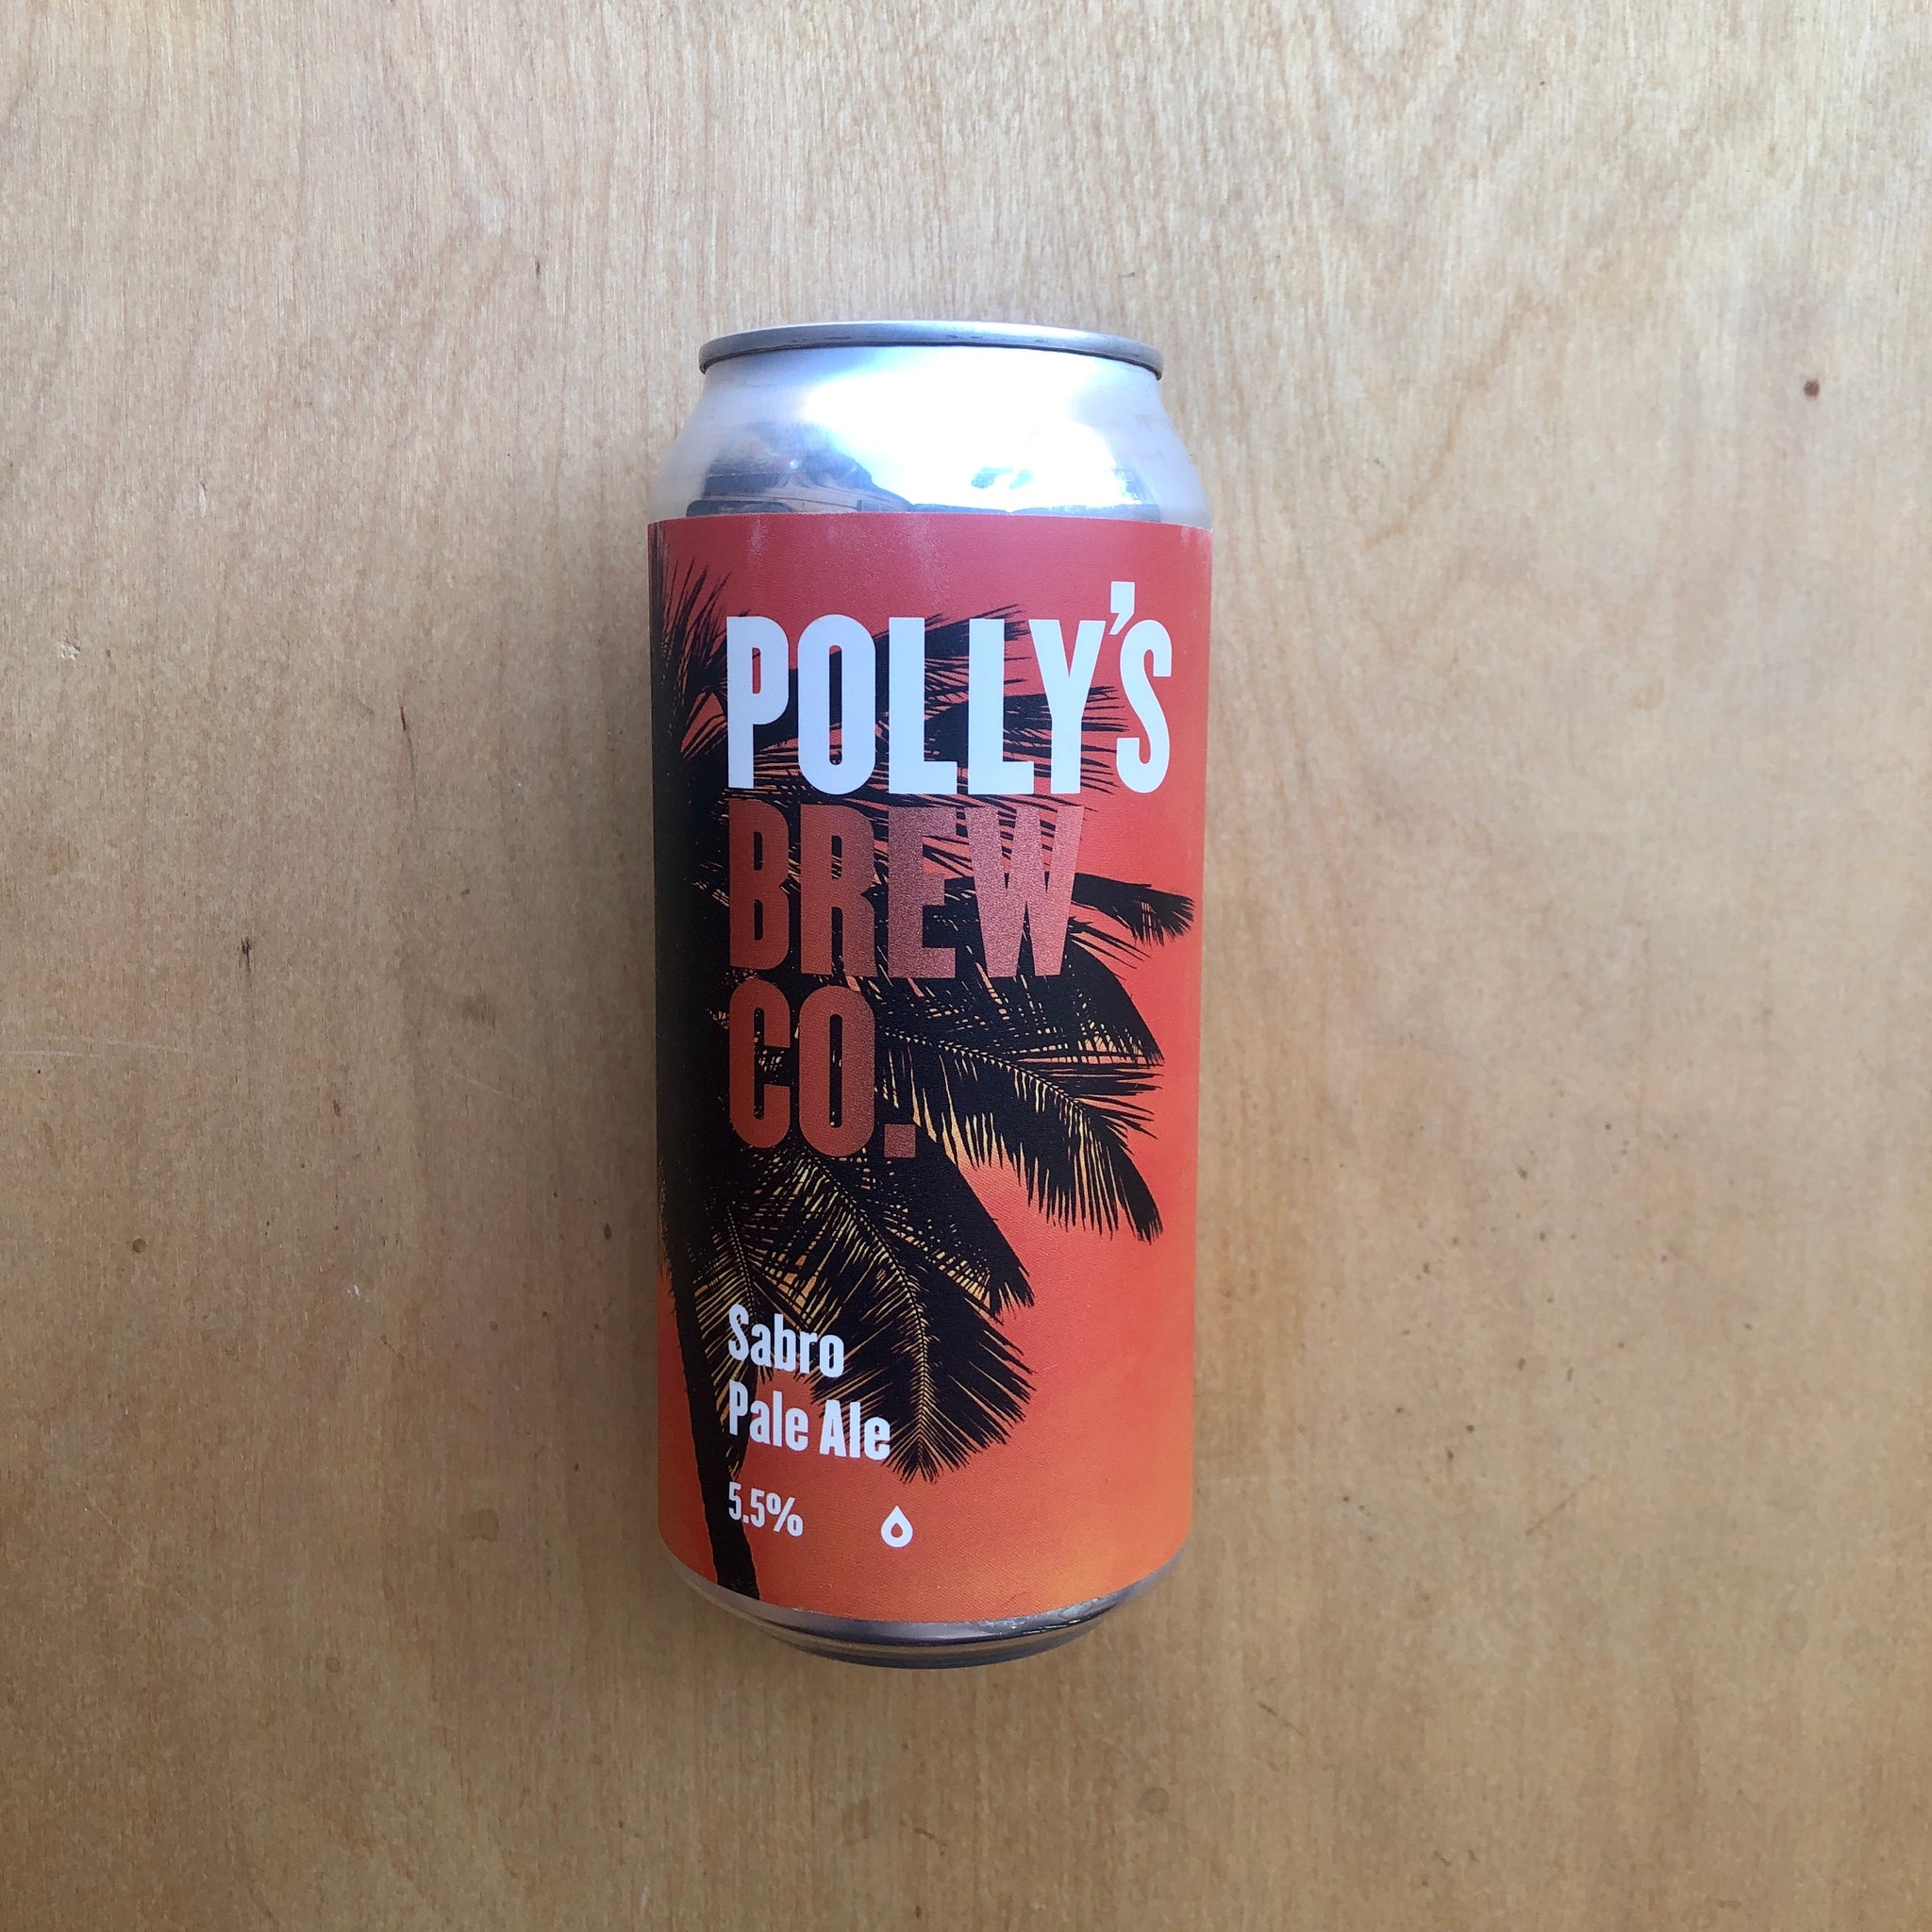 Polly's - Sabro Pale Ale 5.5% (440ml)